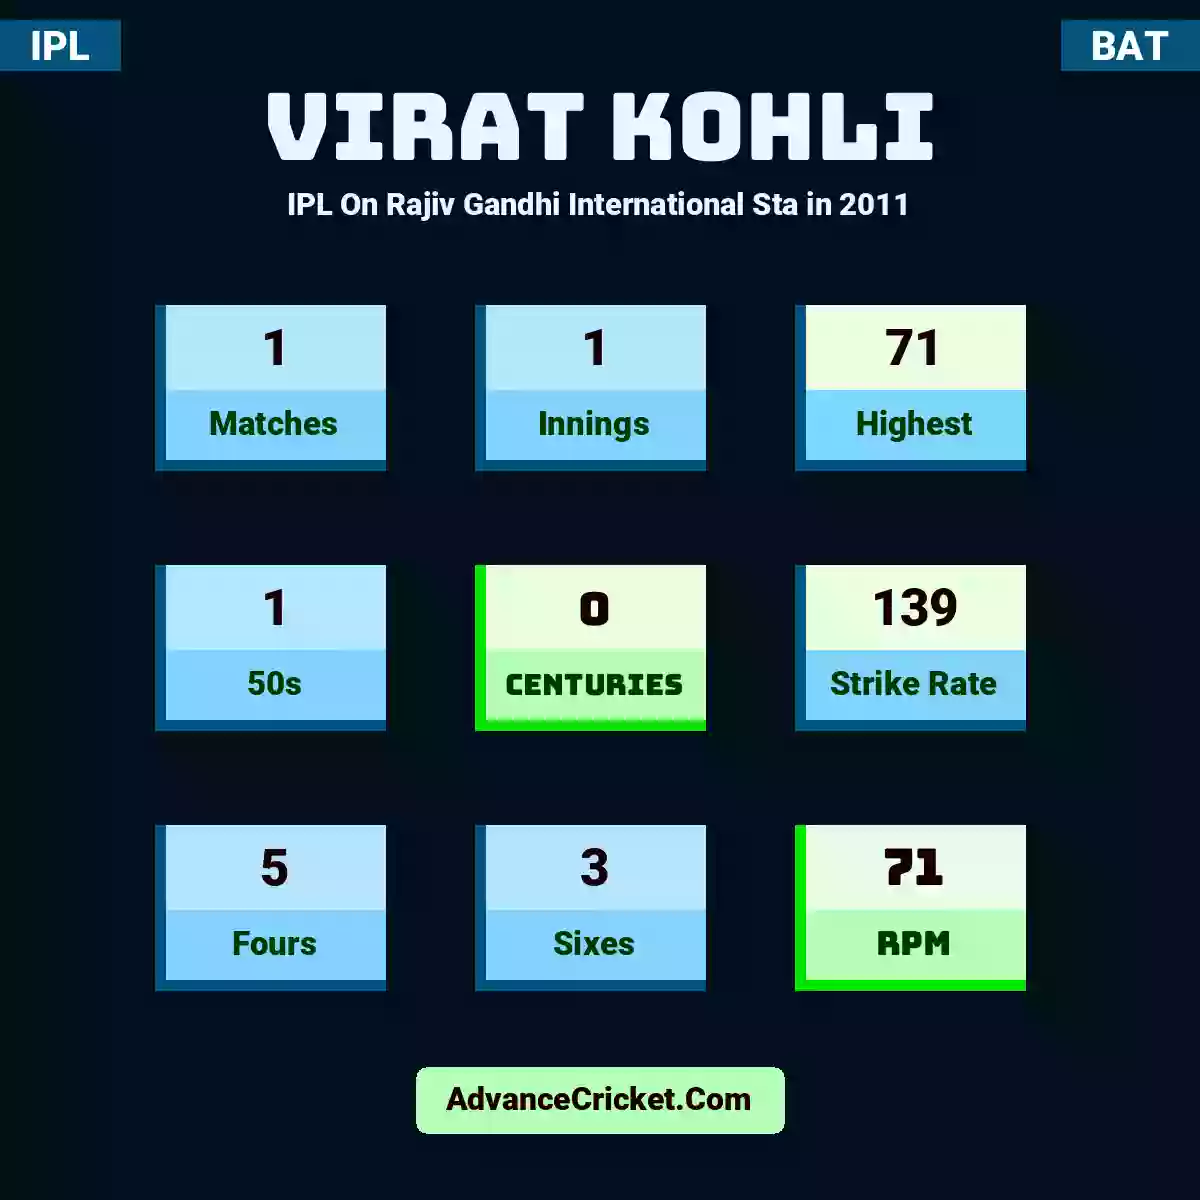 Virat Kohli IPL  On Rajiv Gandhi International Sta in 2011, Virat Kohli played 1 matches, scored 71 runs as highest, 1 half-centuries, and 0 centuries, with a strike rate of 139. V.Kohli hit 5 fours and 3 sixes, with an RPM of 71.